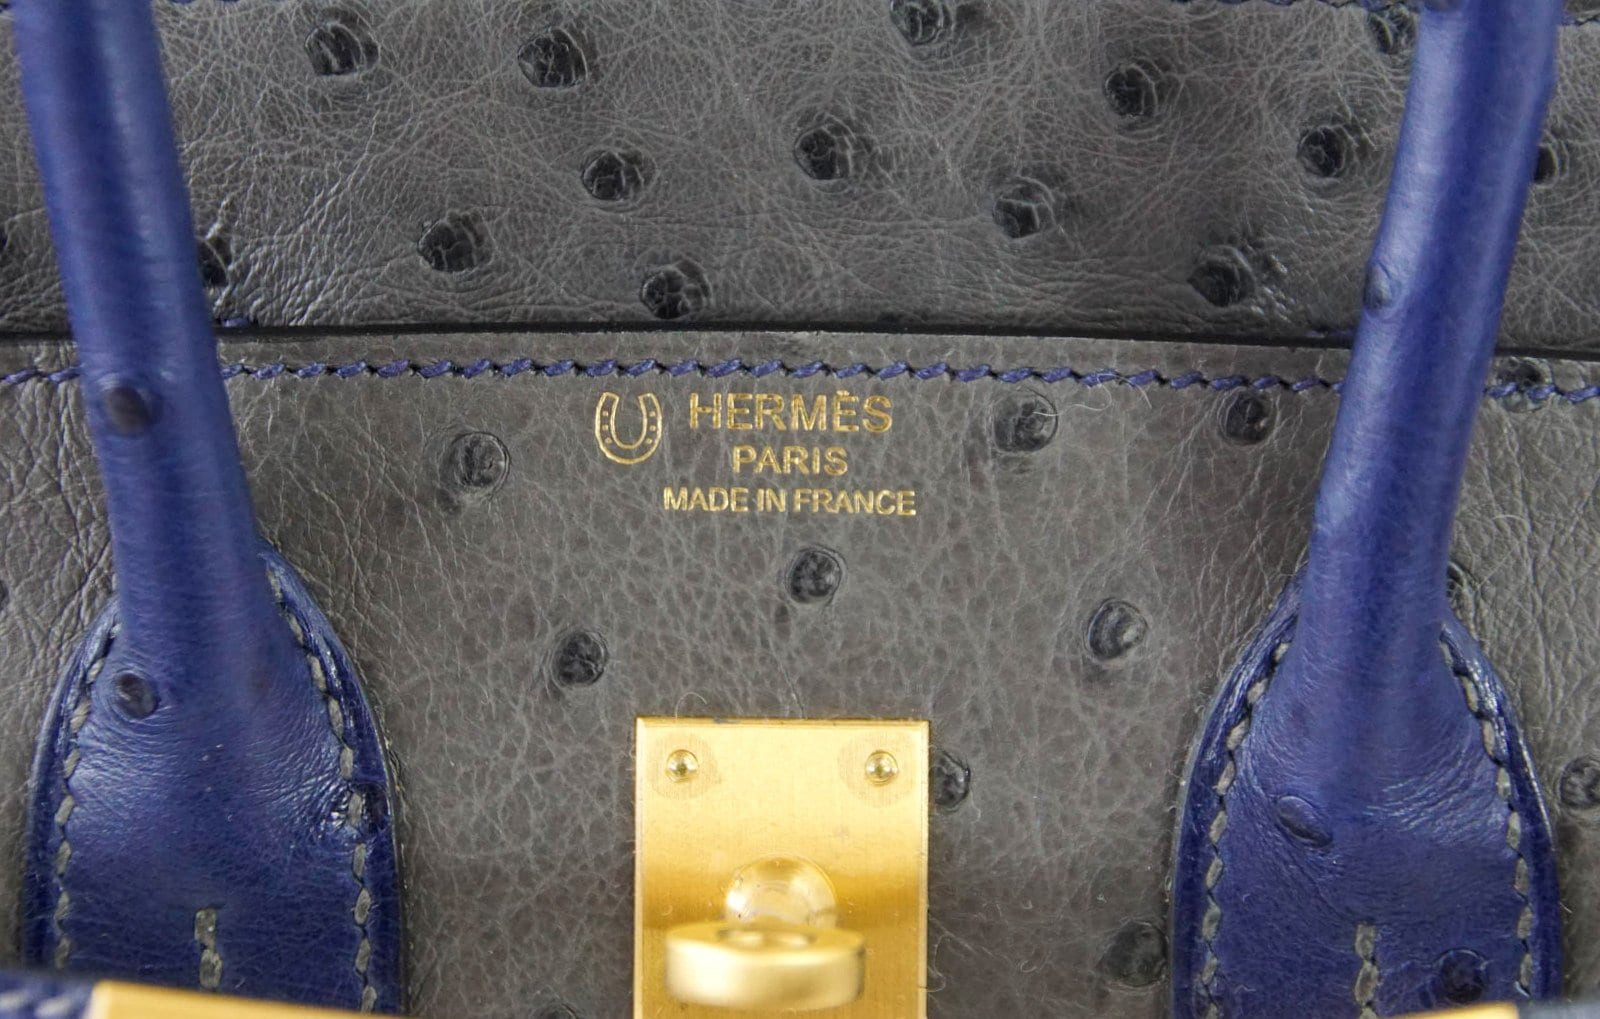 Hermes Birkin Bag in Blue Iris Ostrich Skin